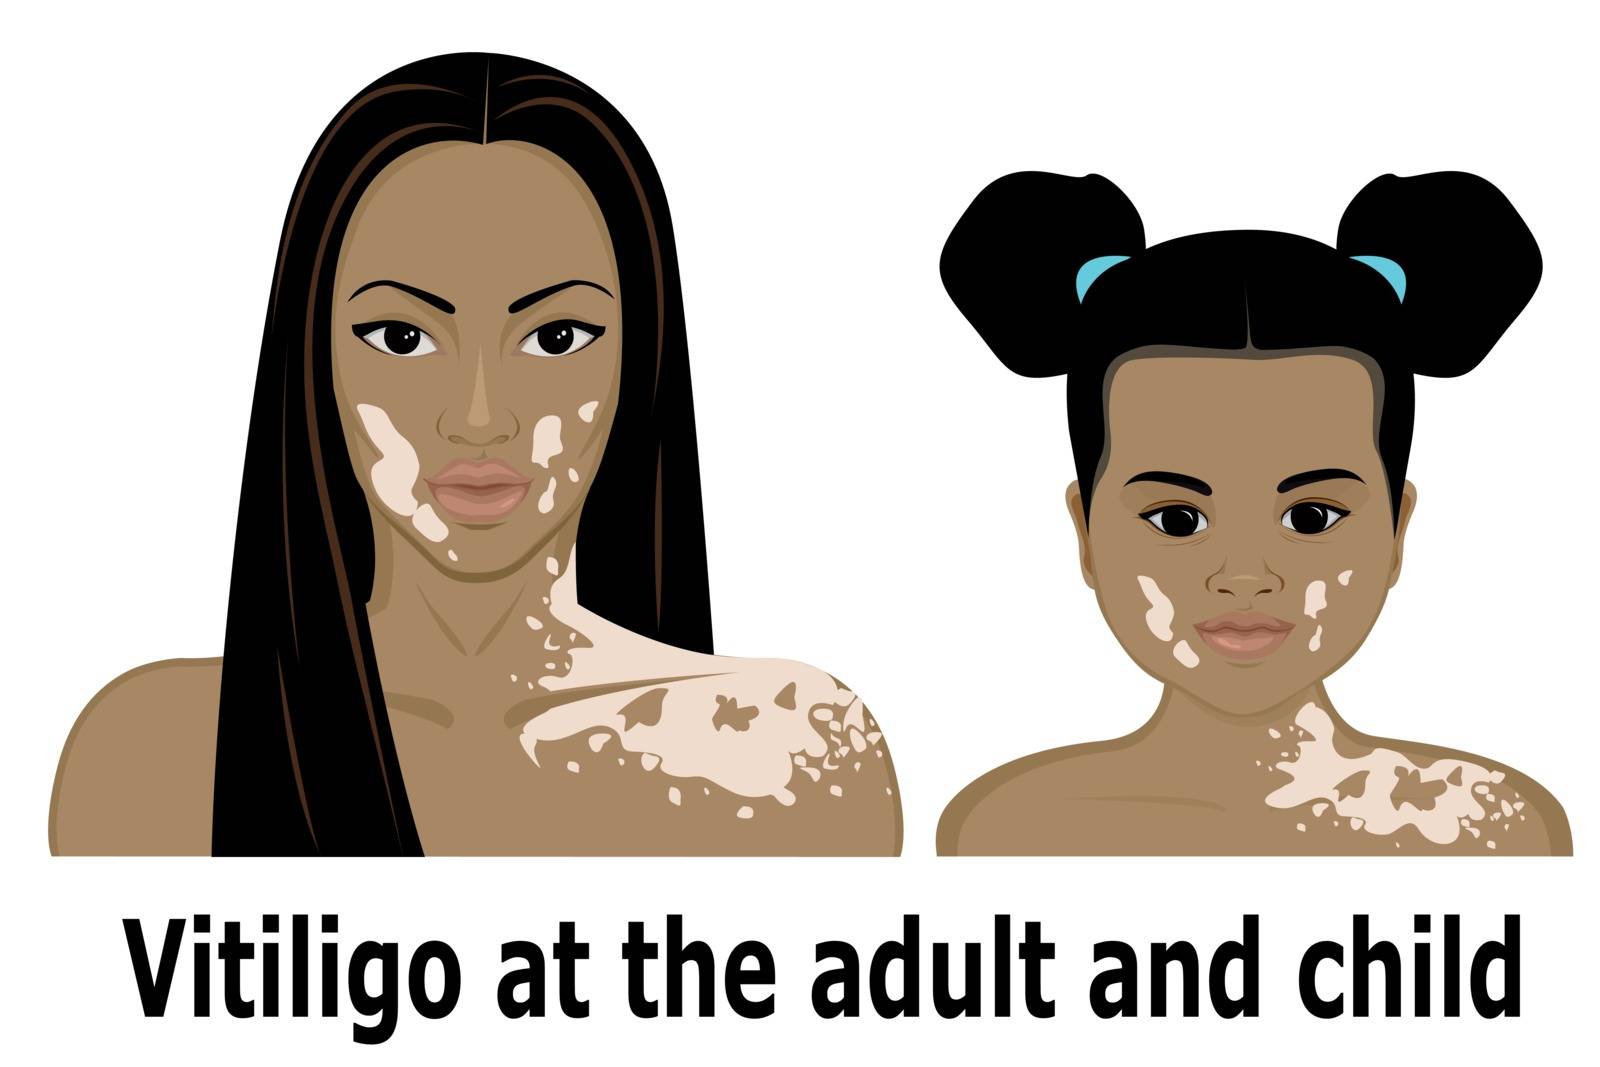 Vitiligo at the adult and child by Scio21